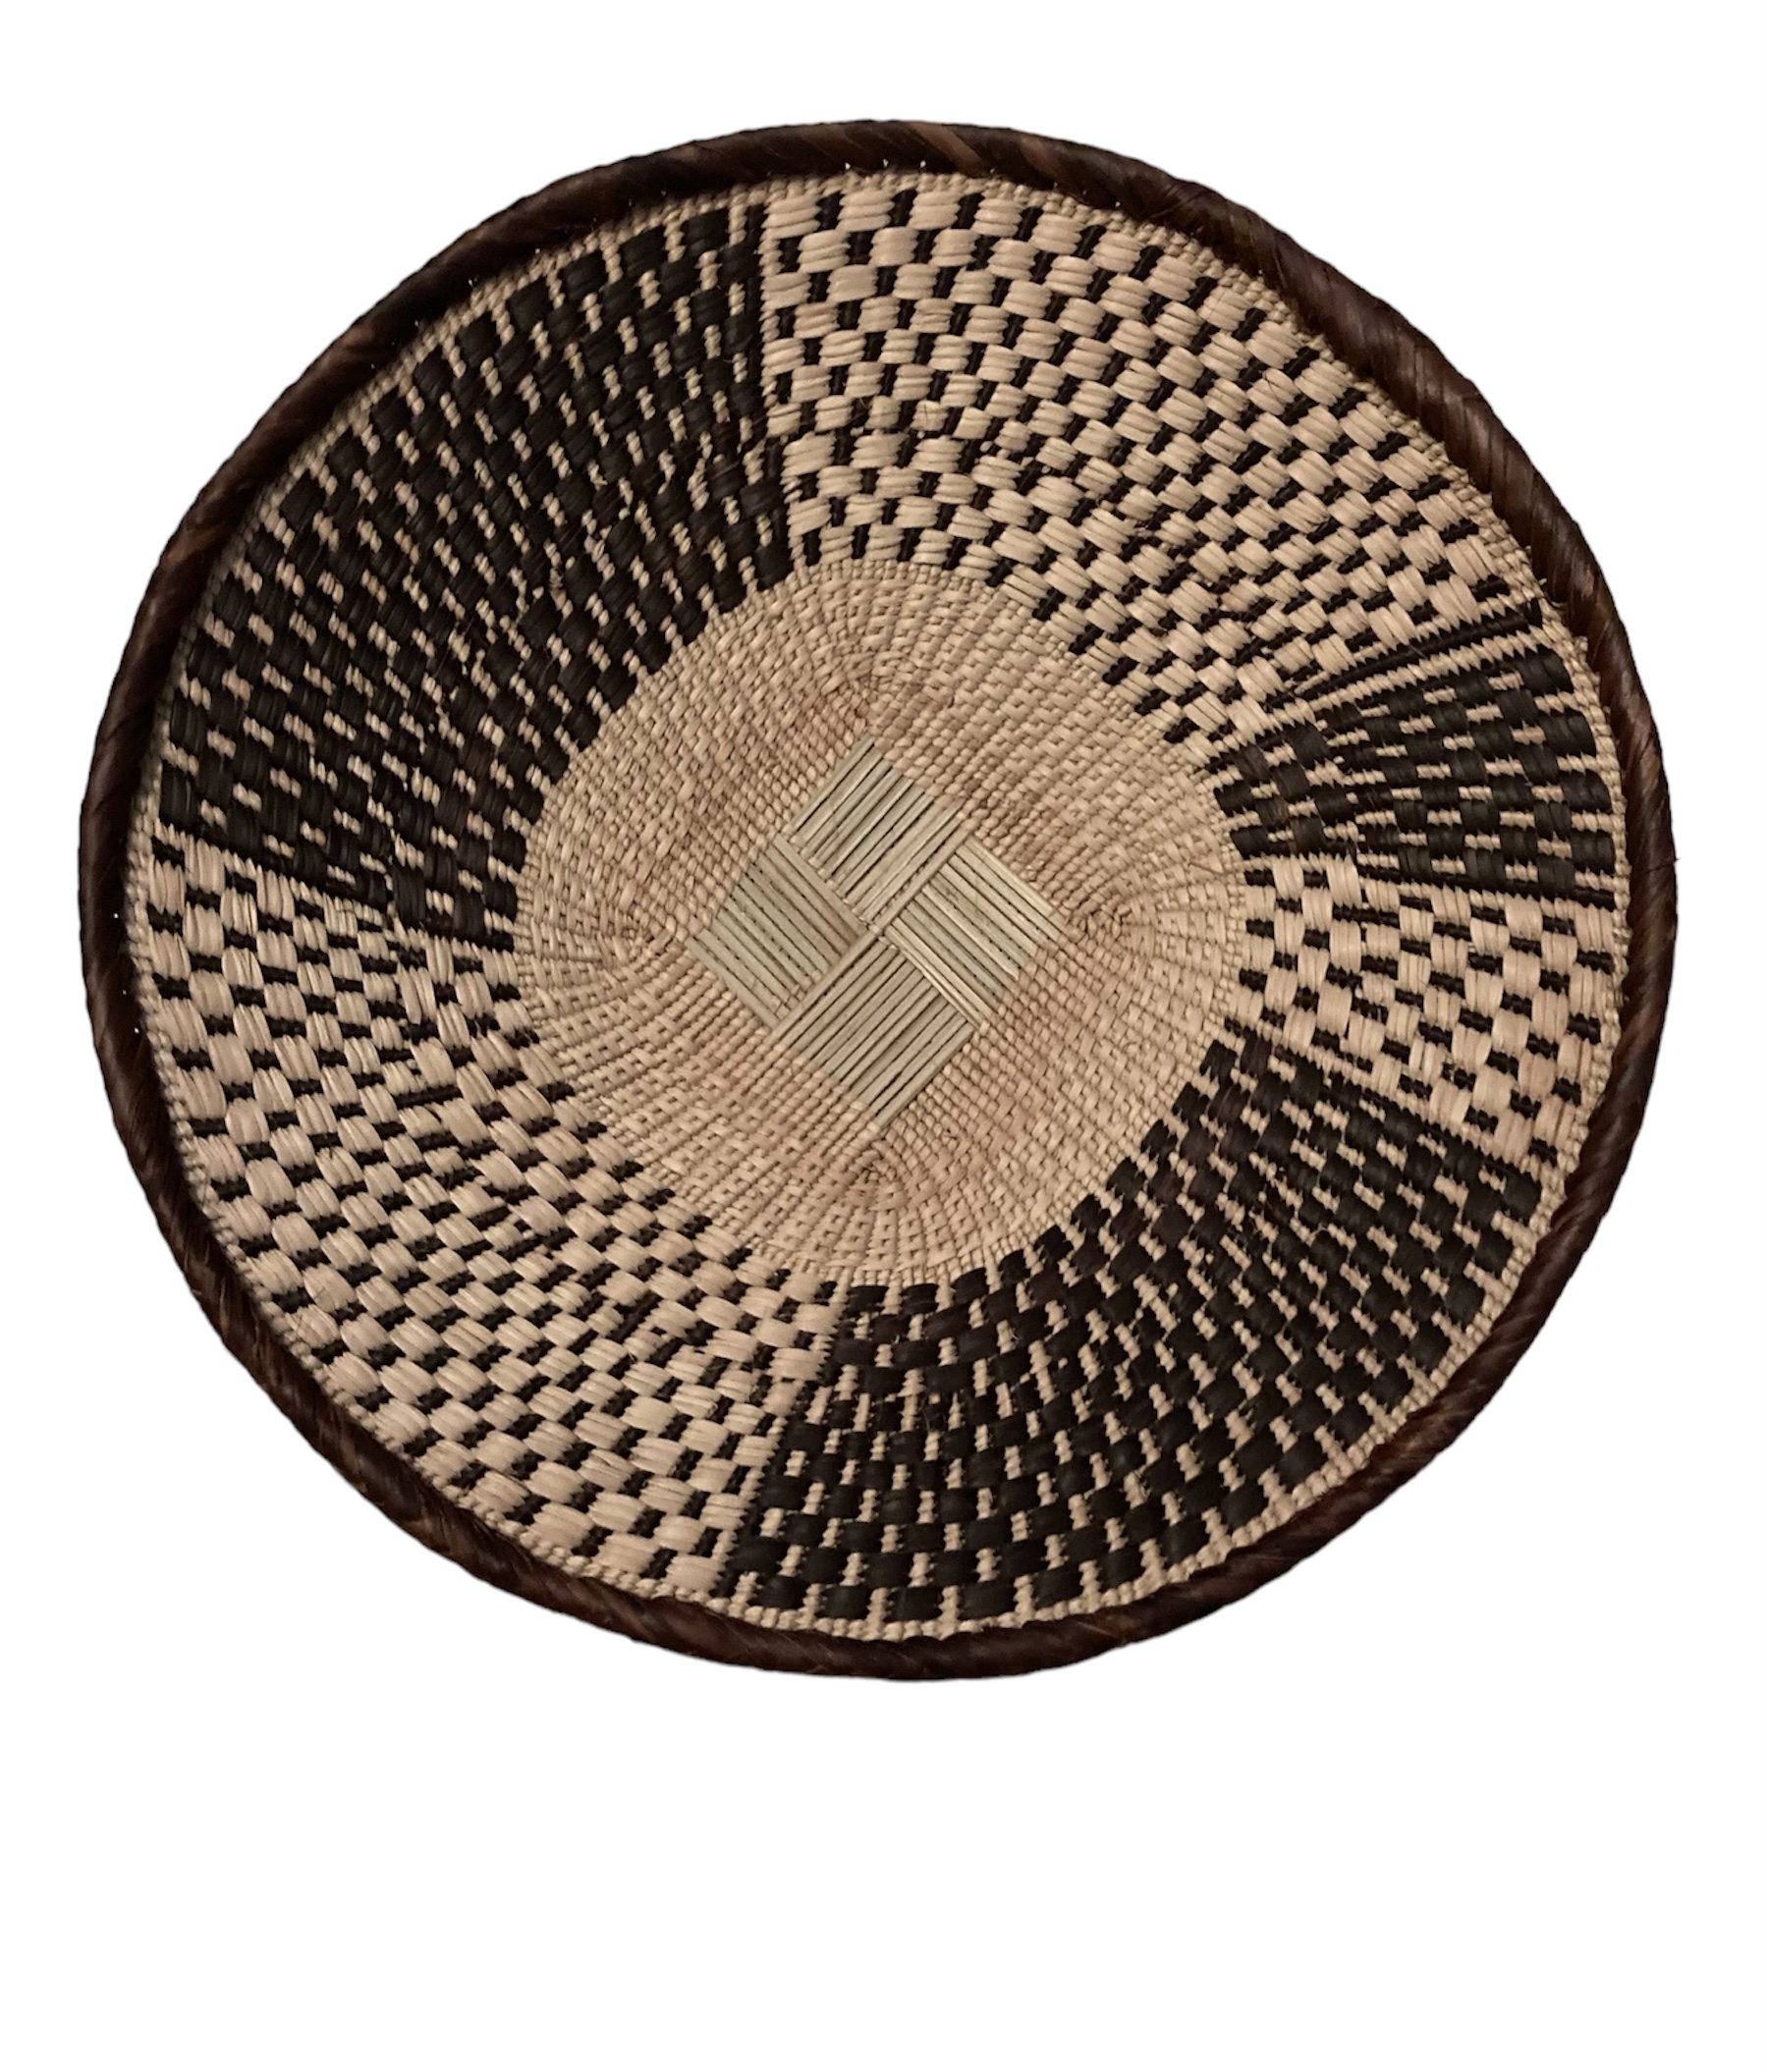 Tonga Basket from Zimbabwe - Design #001 - 14\" dia.